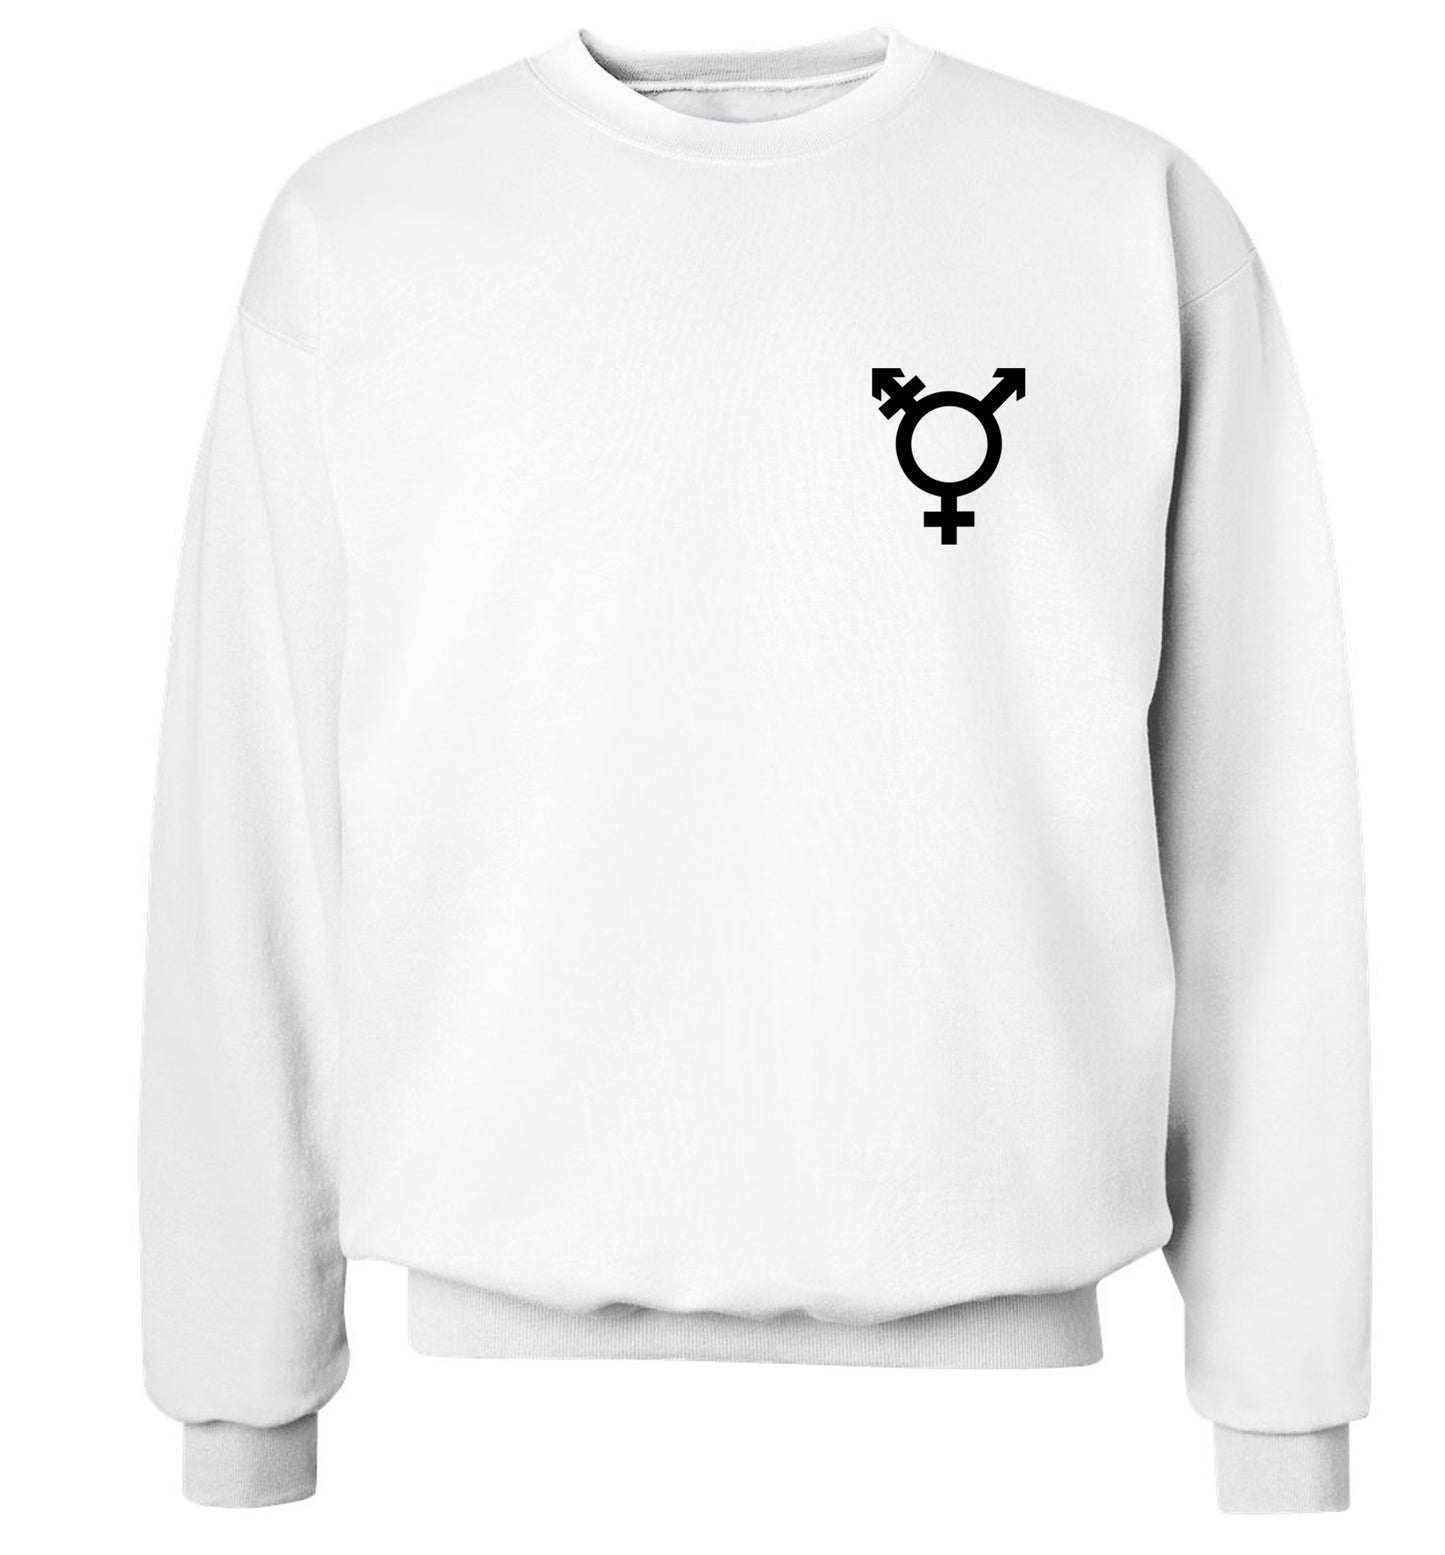 Trans gender symbol pocket Adult's unisex white Sweater 2XL